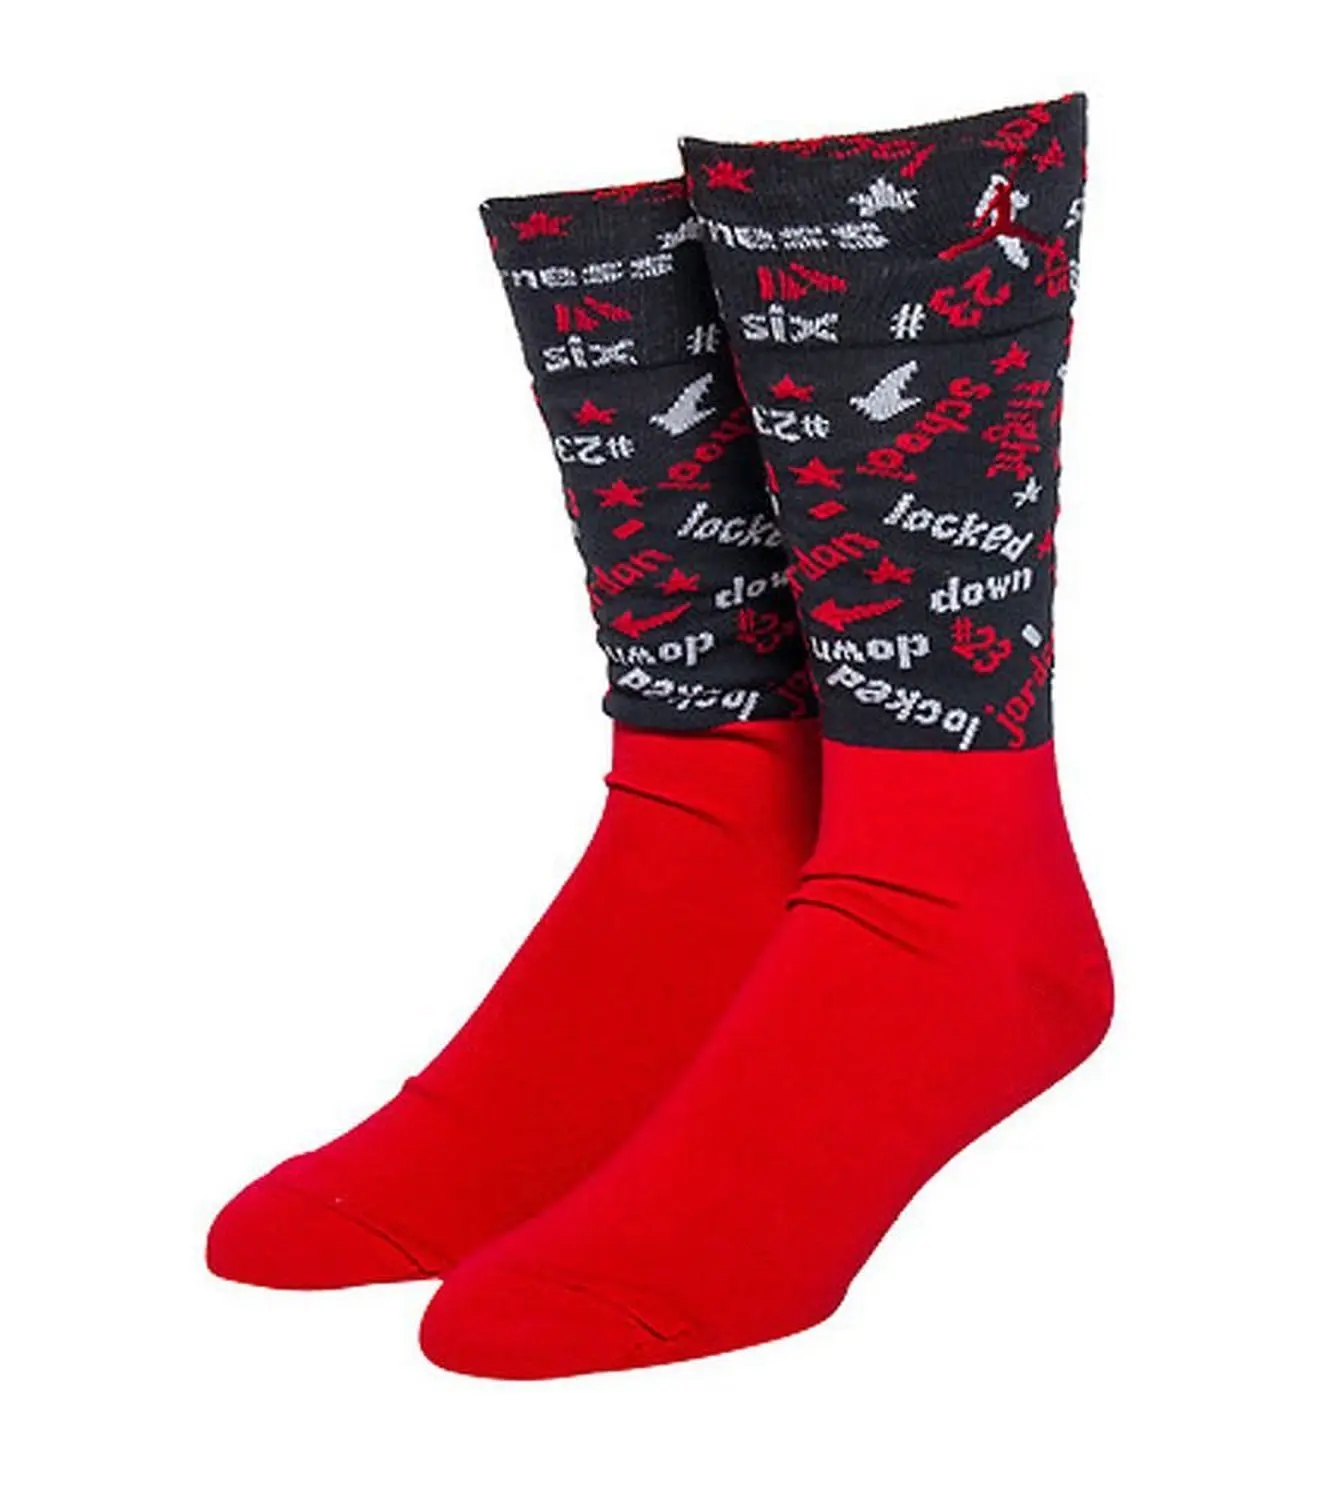 Cheap Jordan Red Socks, find Jordan Red Socks deals on line at Alibaba.com